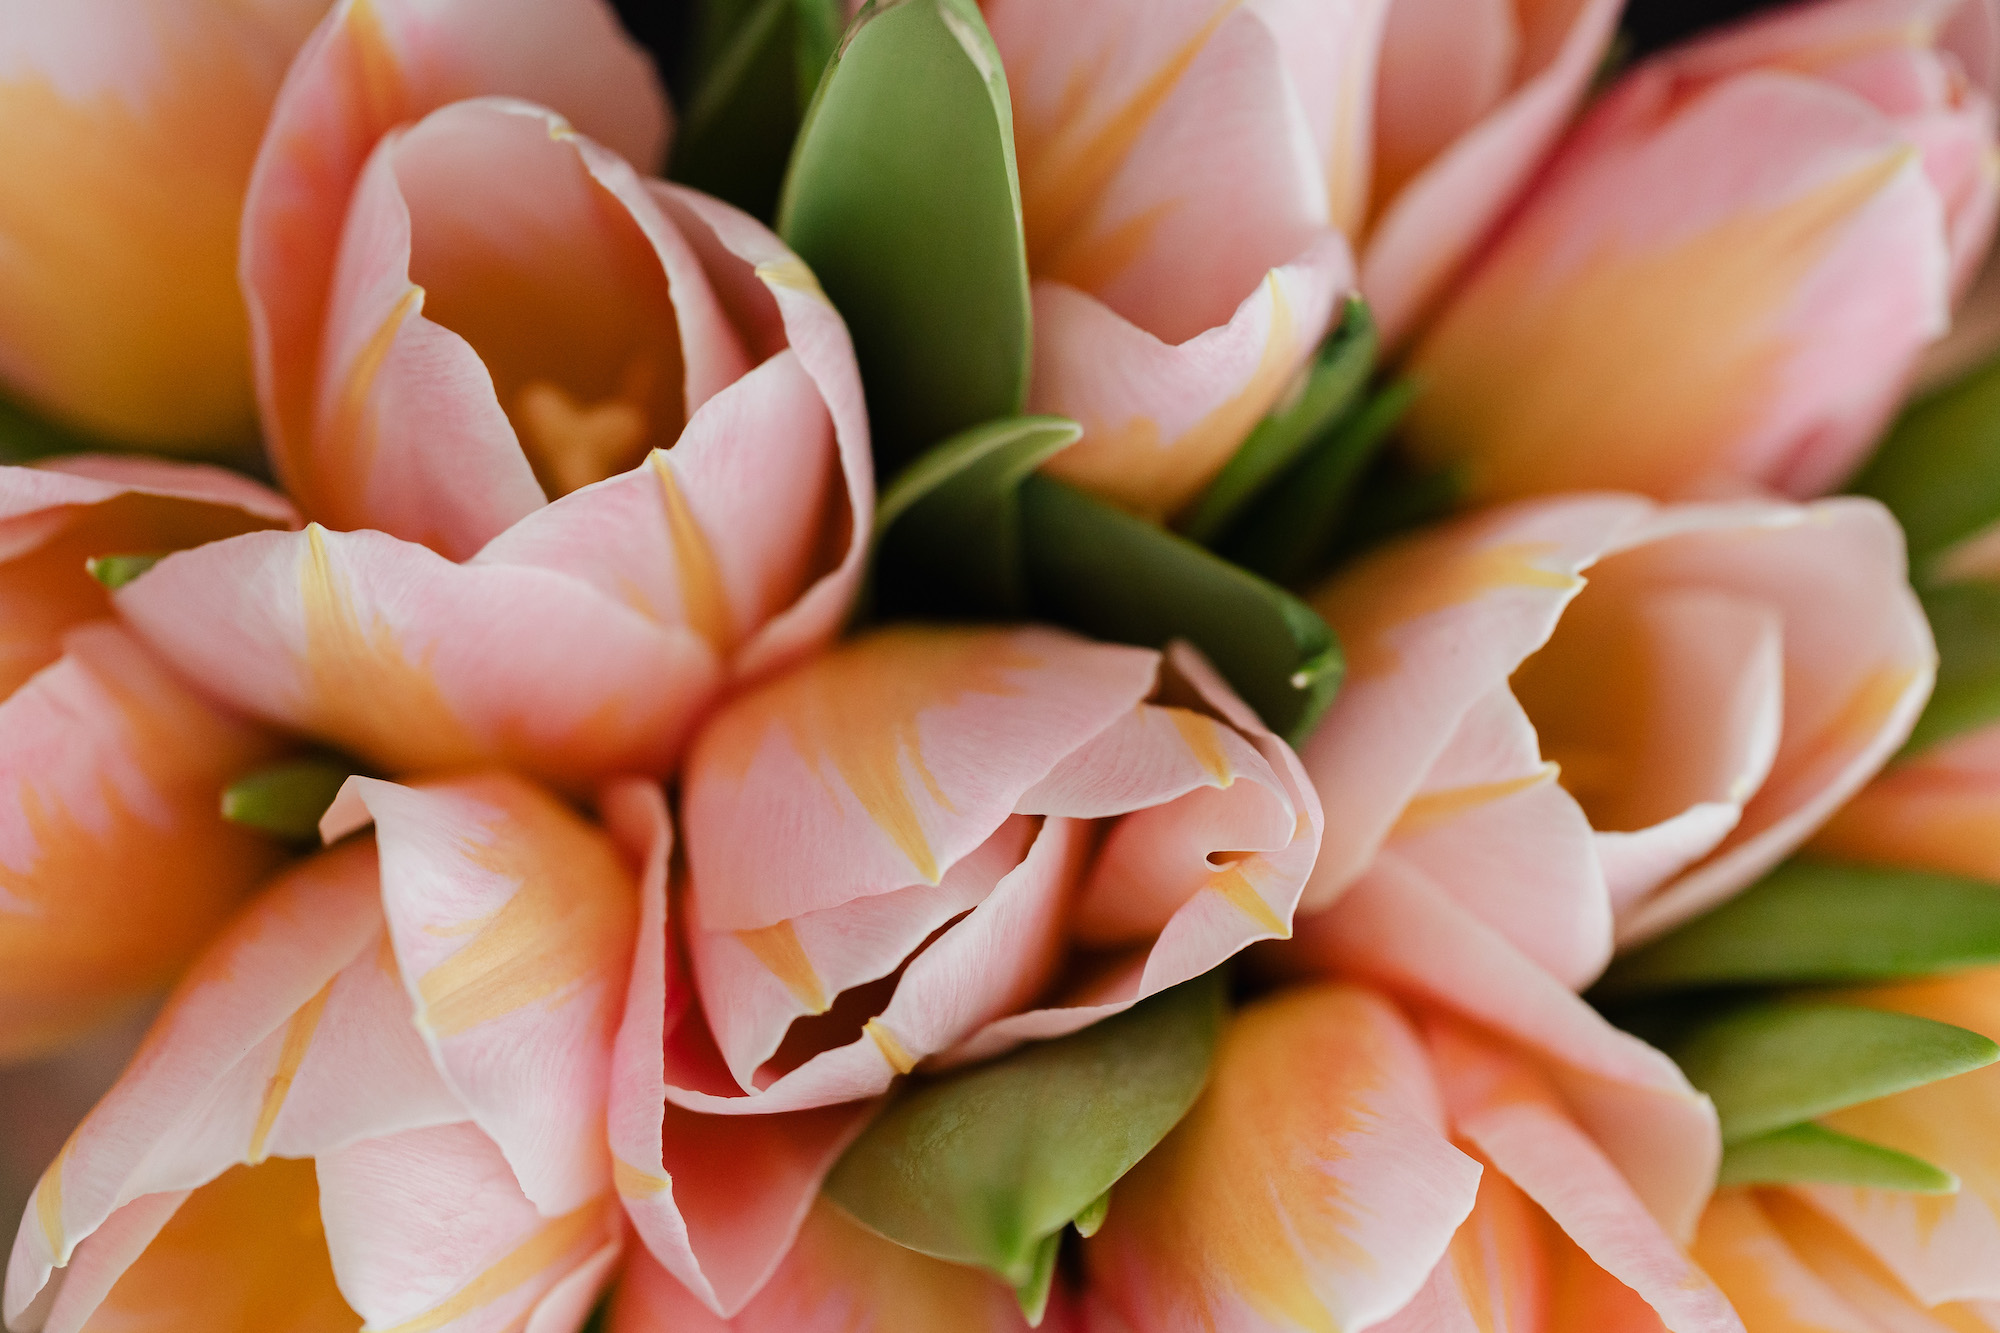 kaboompics_Pink and yellow tulips-6r